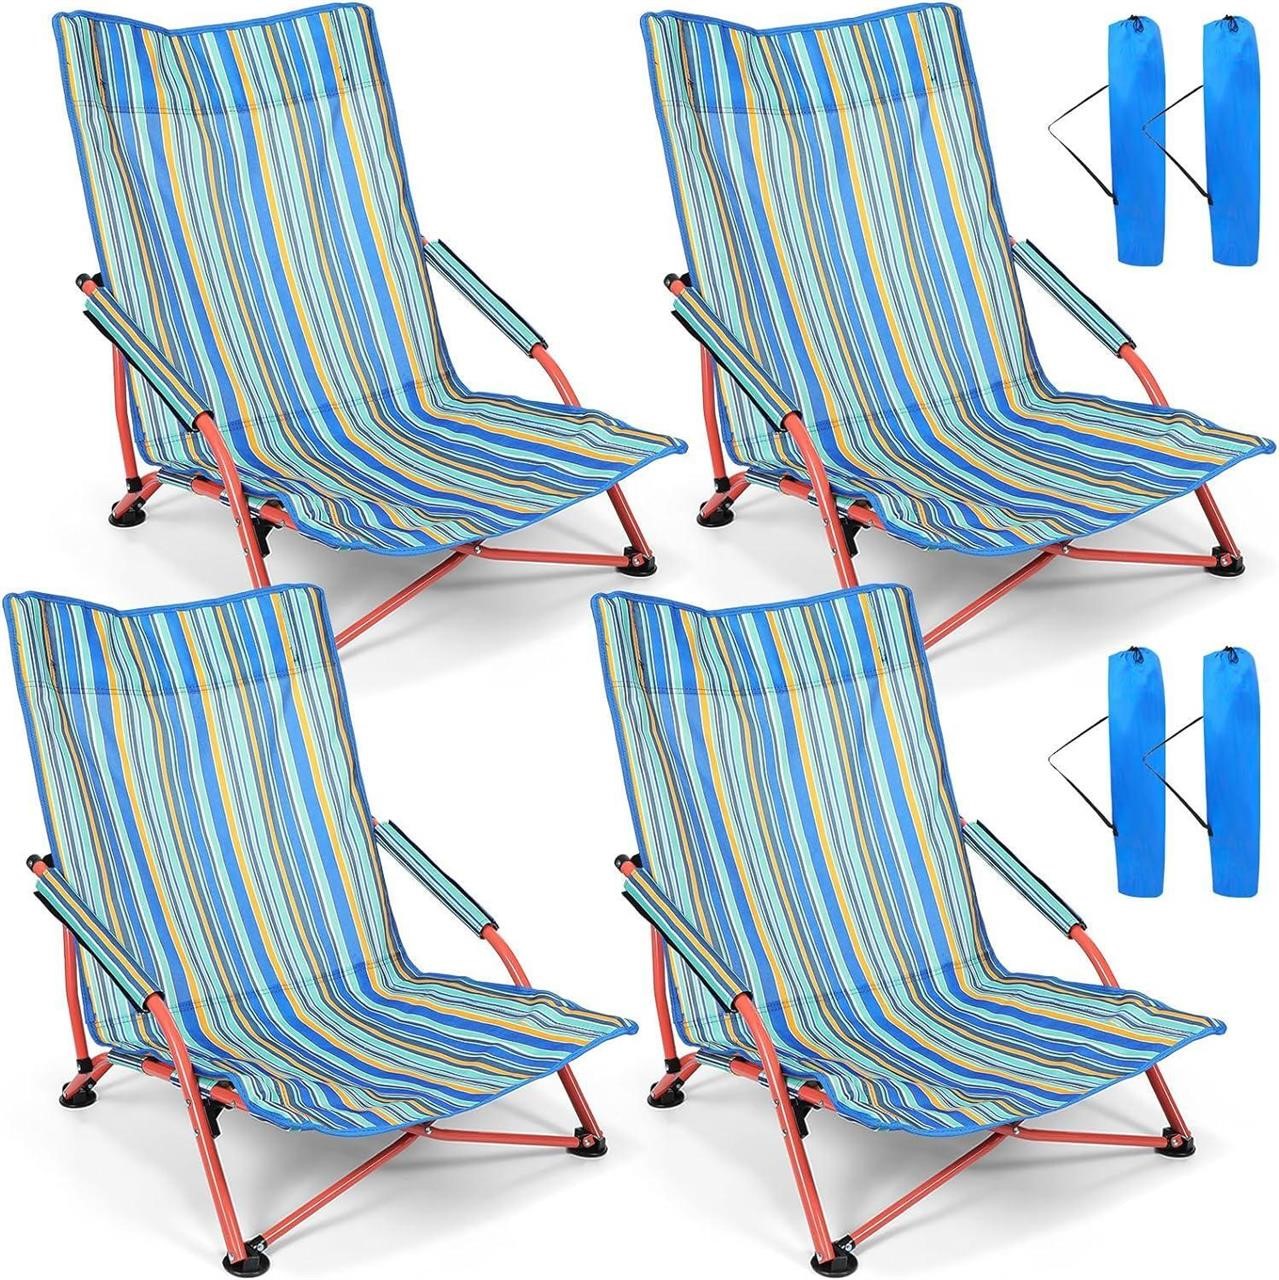 Wenqik 4pc Folding Beach Chairs